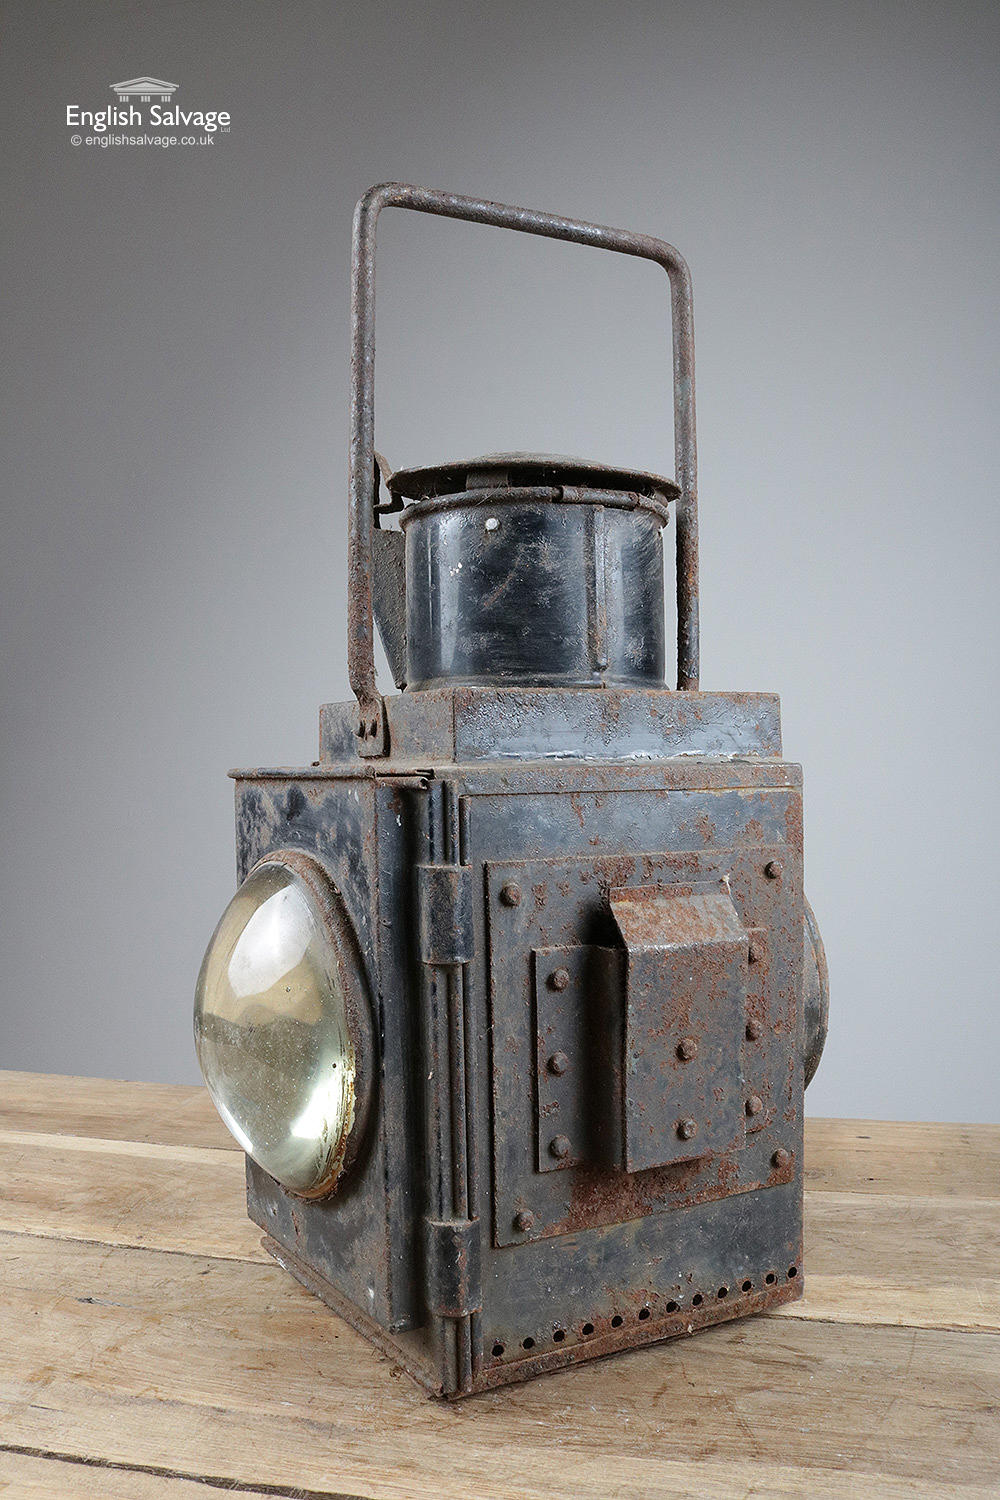 Cuervo Depresión Roux Reclaimed old railway lamps / lanterns